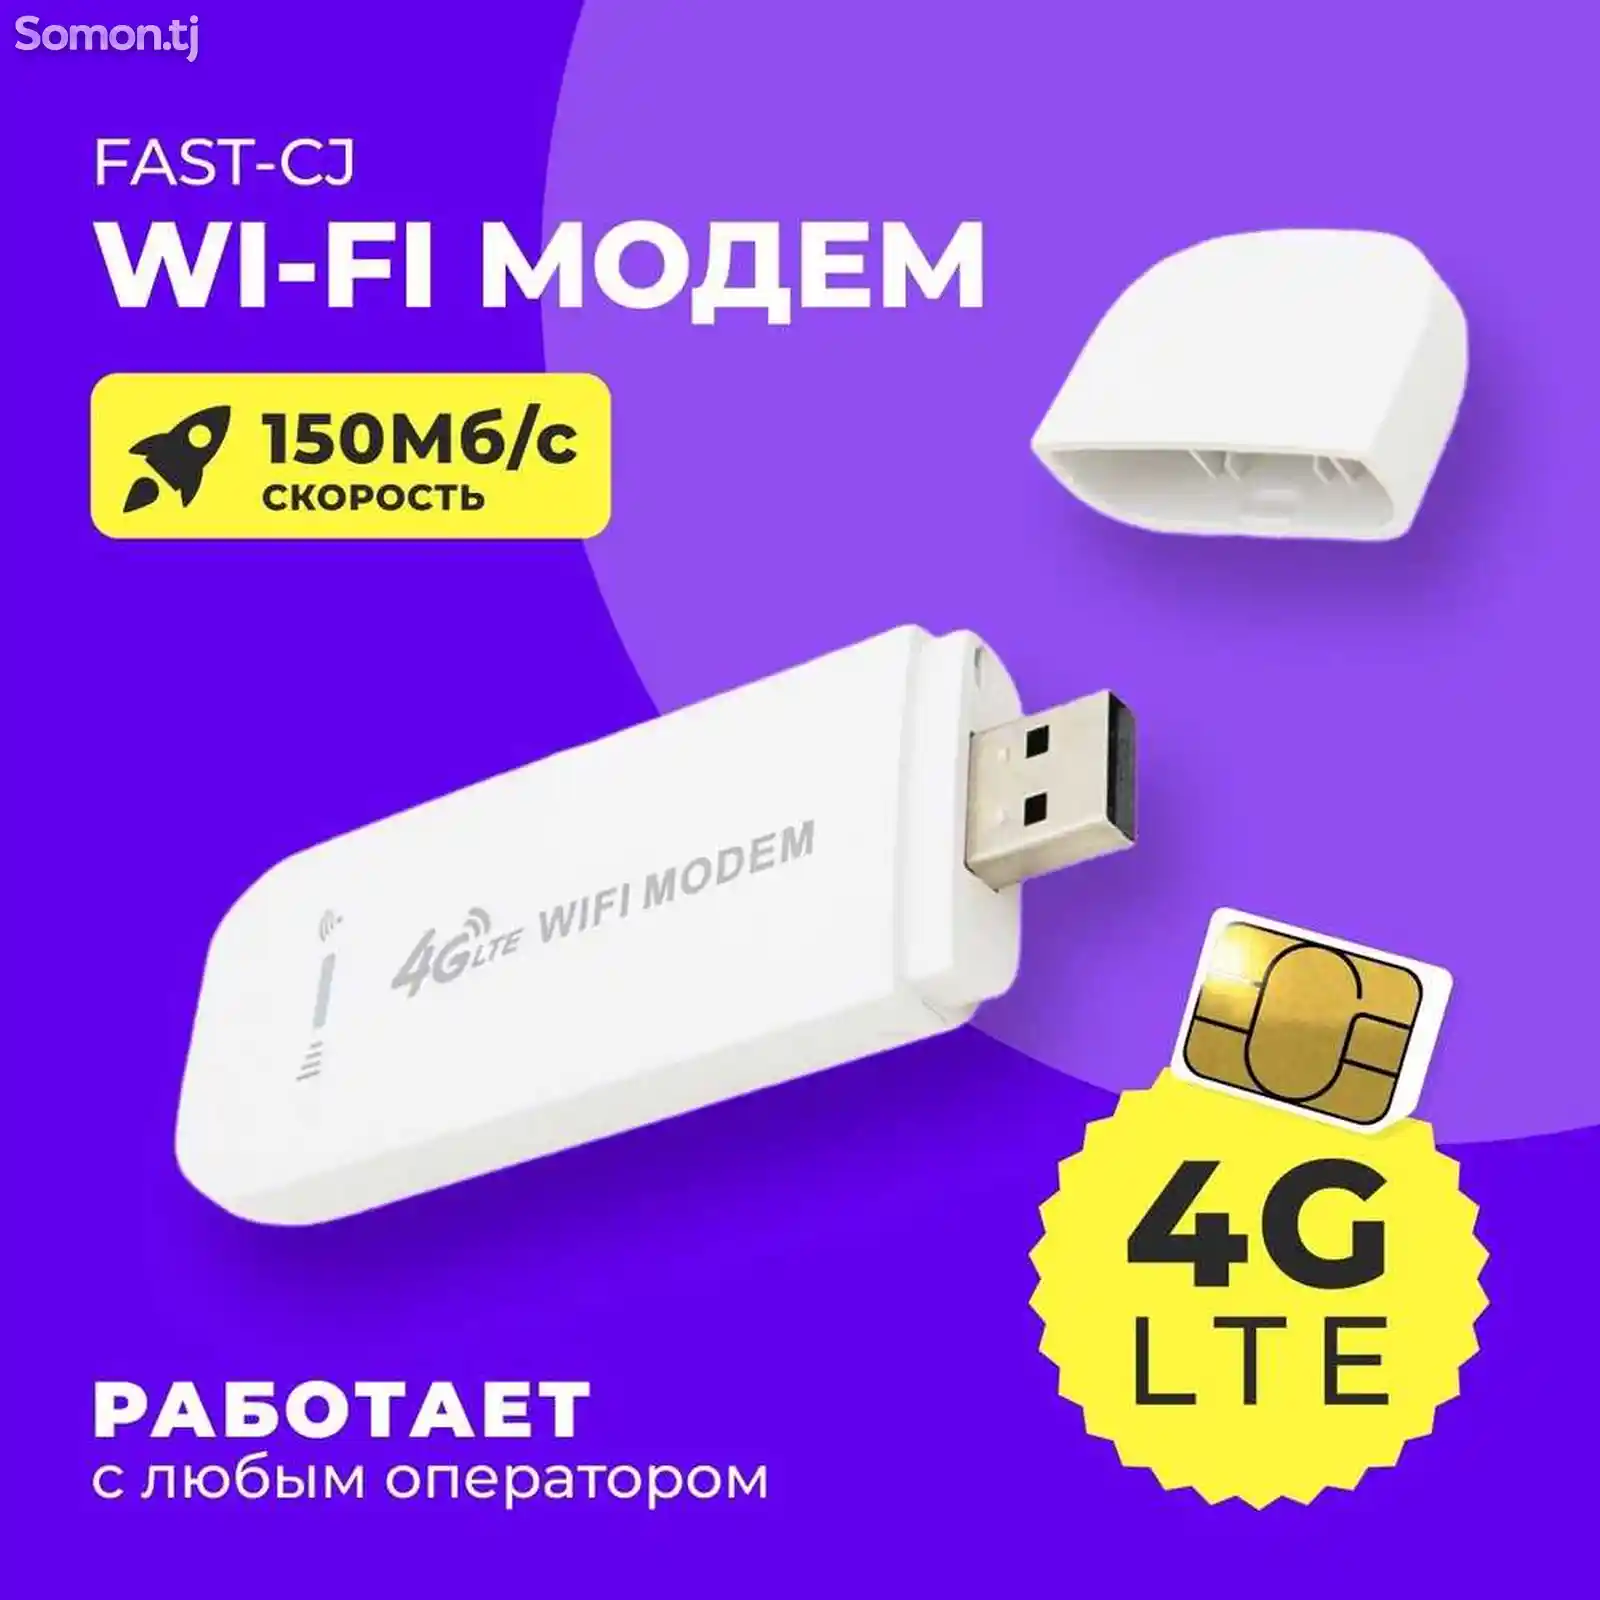 WiFi Модем 4g портативный с SIM-картой , LTE 4G-6